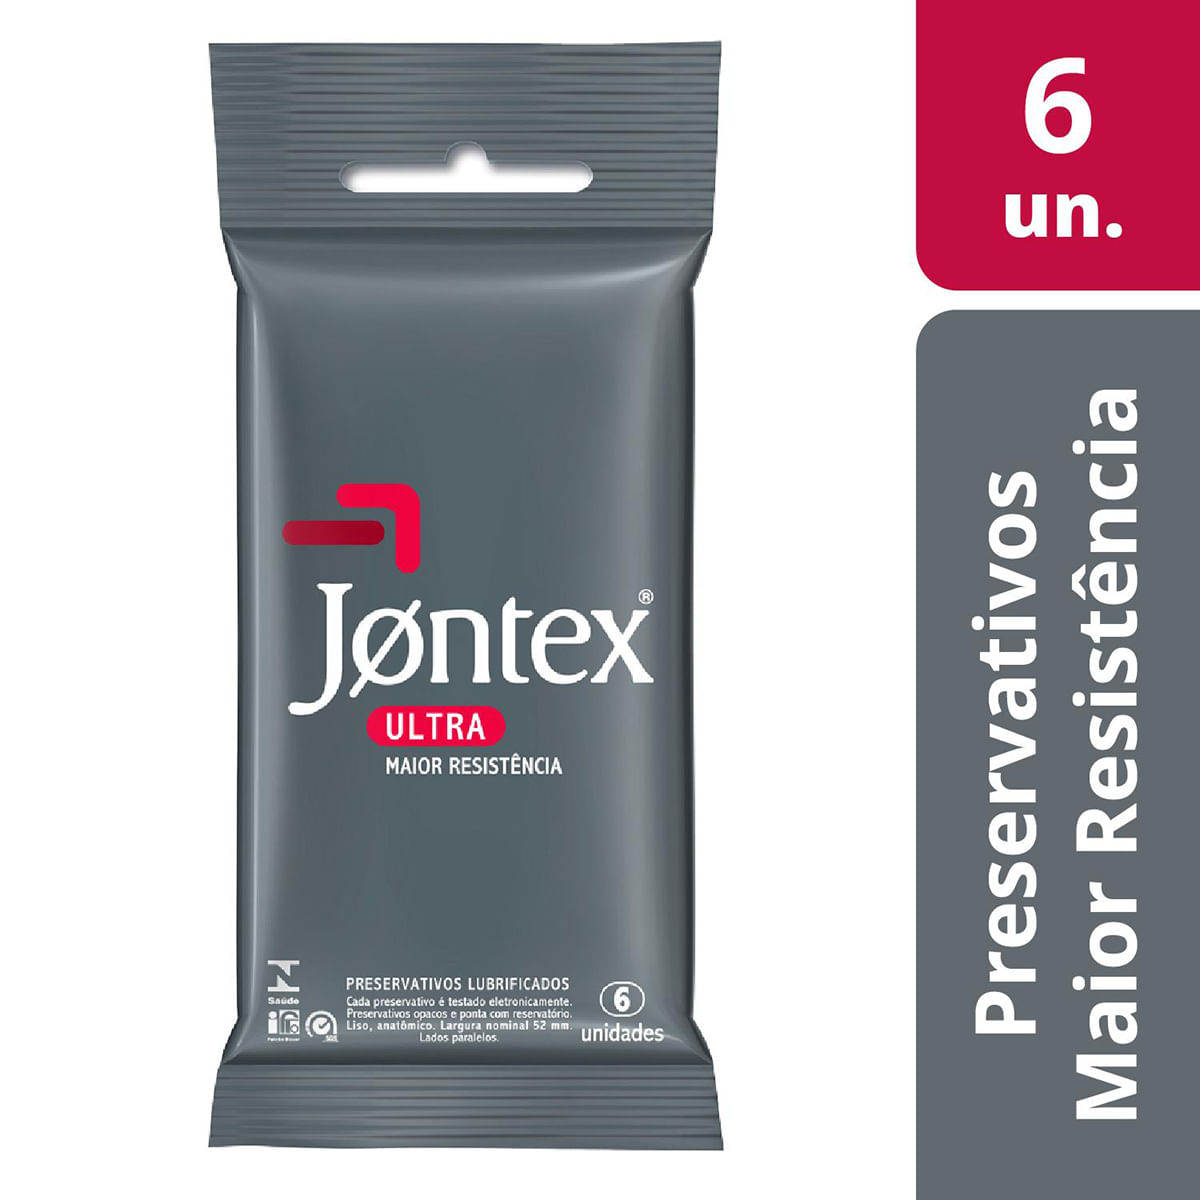 Preservativos Lubrificados Ultra Resistente com 6 unidades Jontex